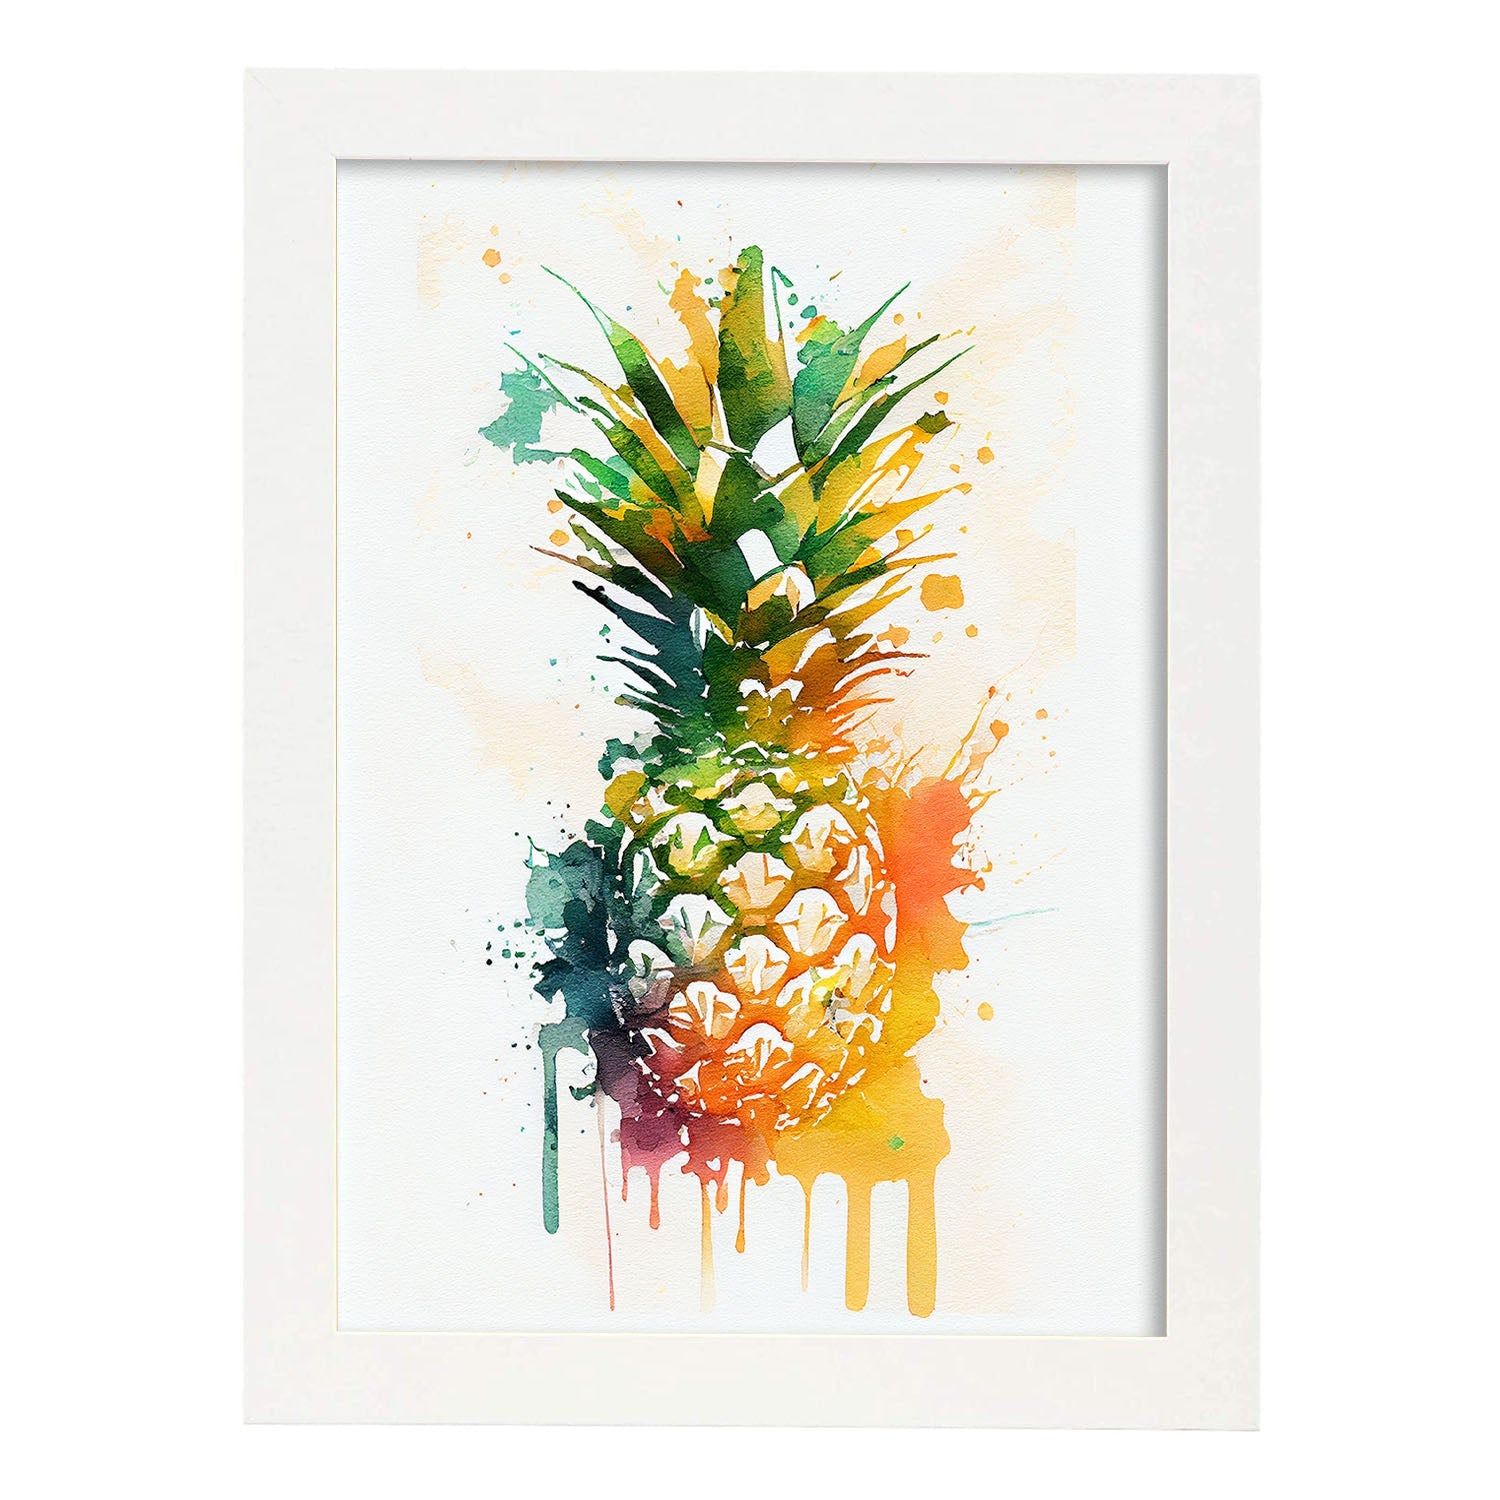 Nacnic minimalist Pineapple_3. Aesthetic Wall Art Prints for Bedroom or Living Room Design.-Artwork-Nacnic-A4-Marco Blanco-Nacnic Estudio SL